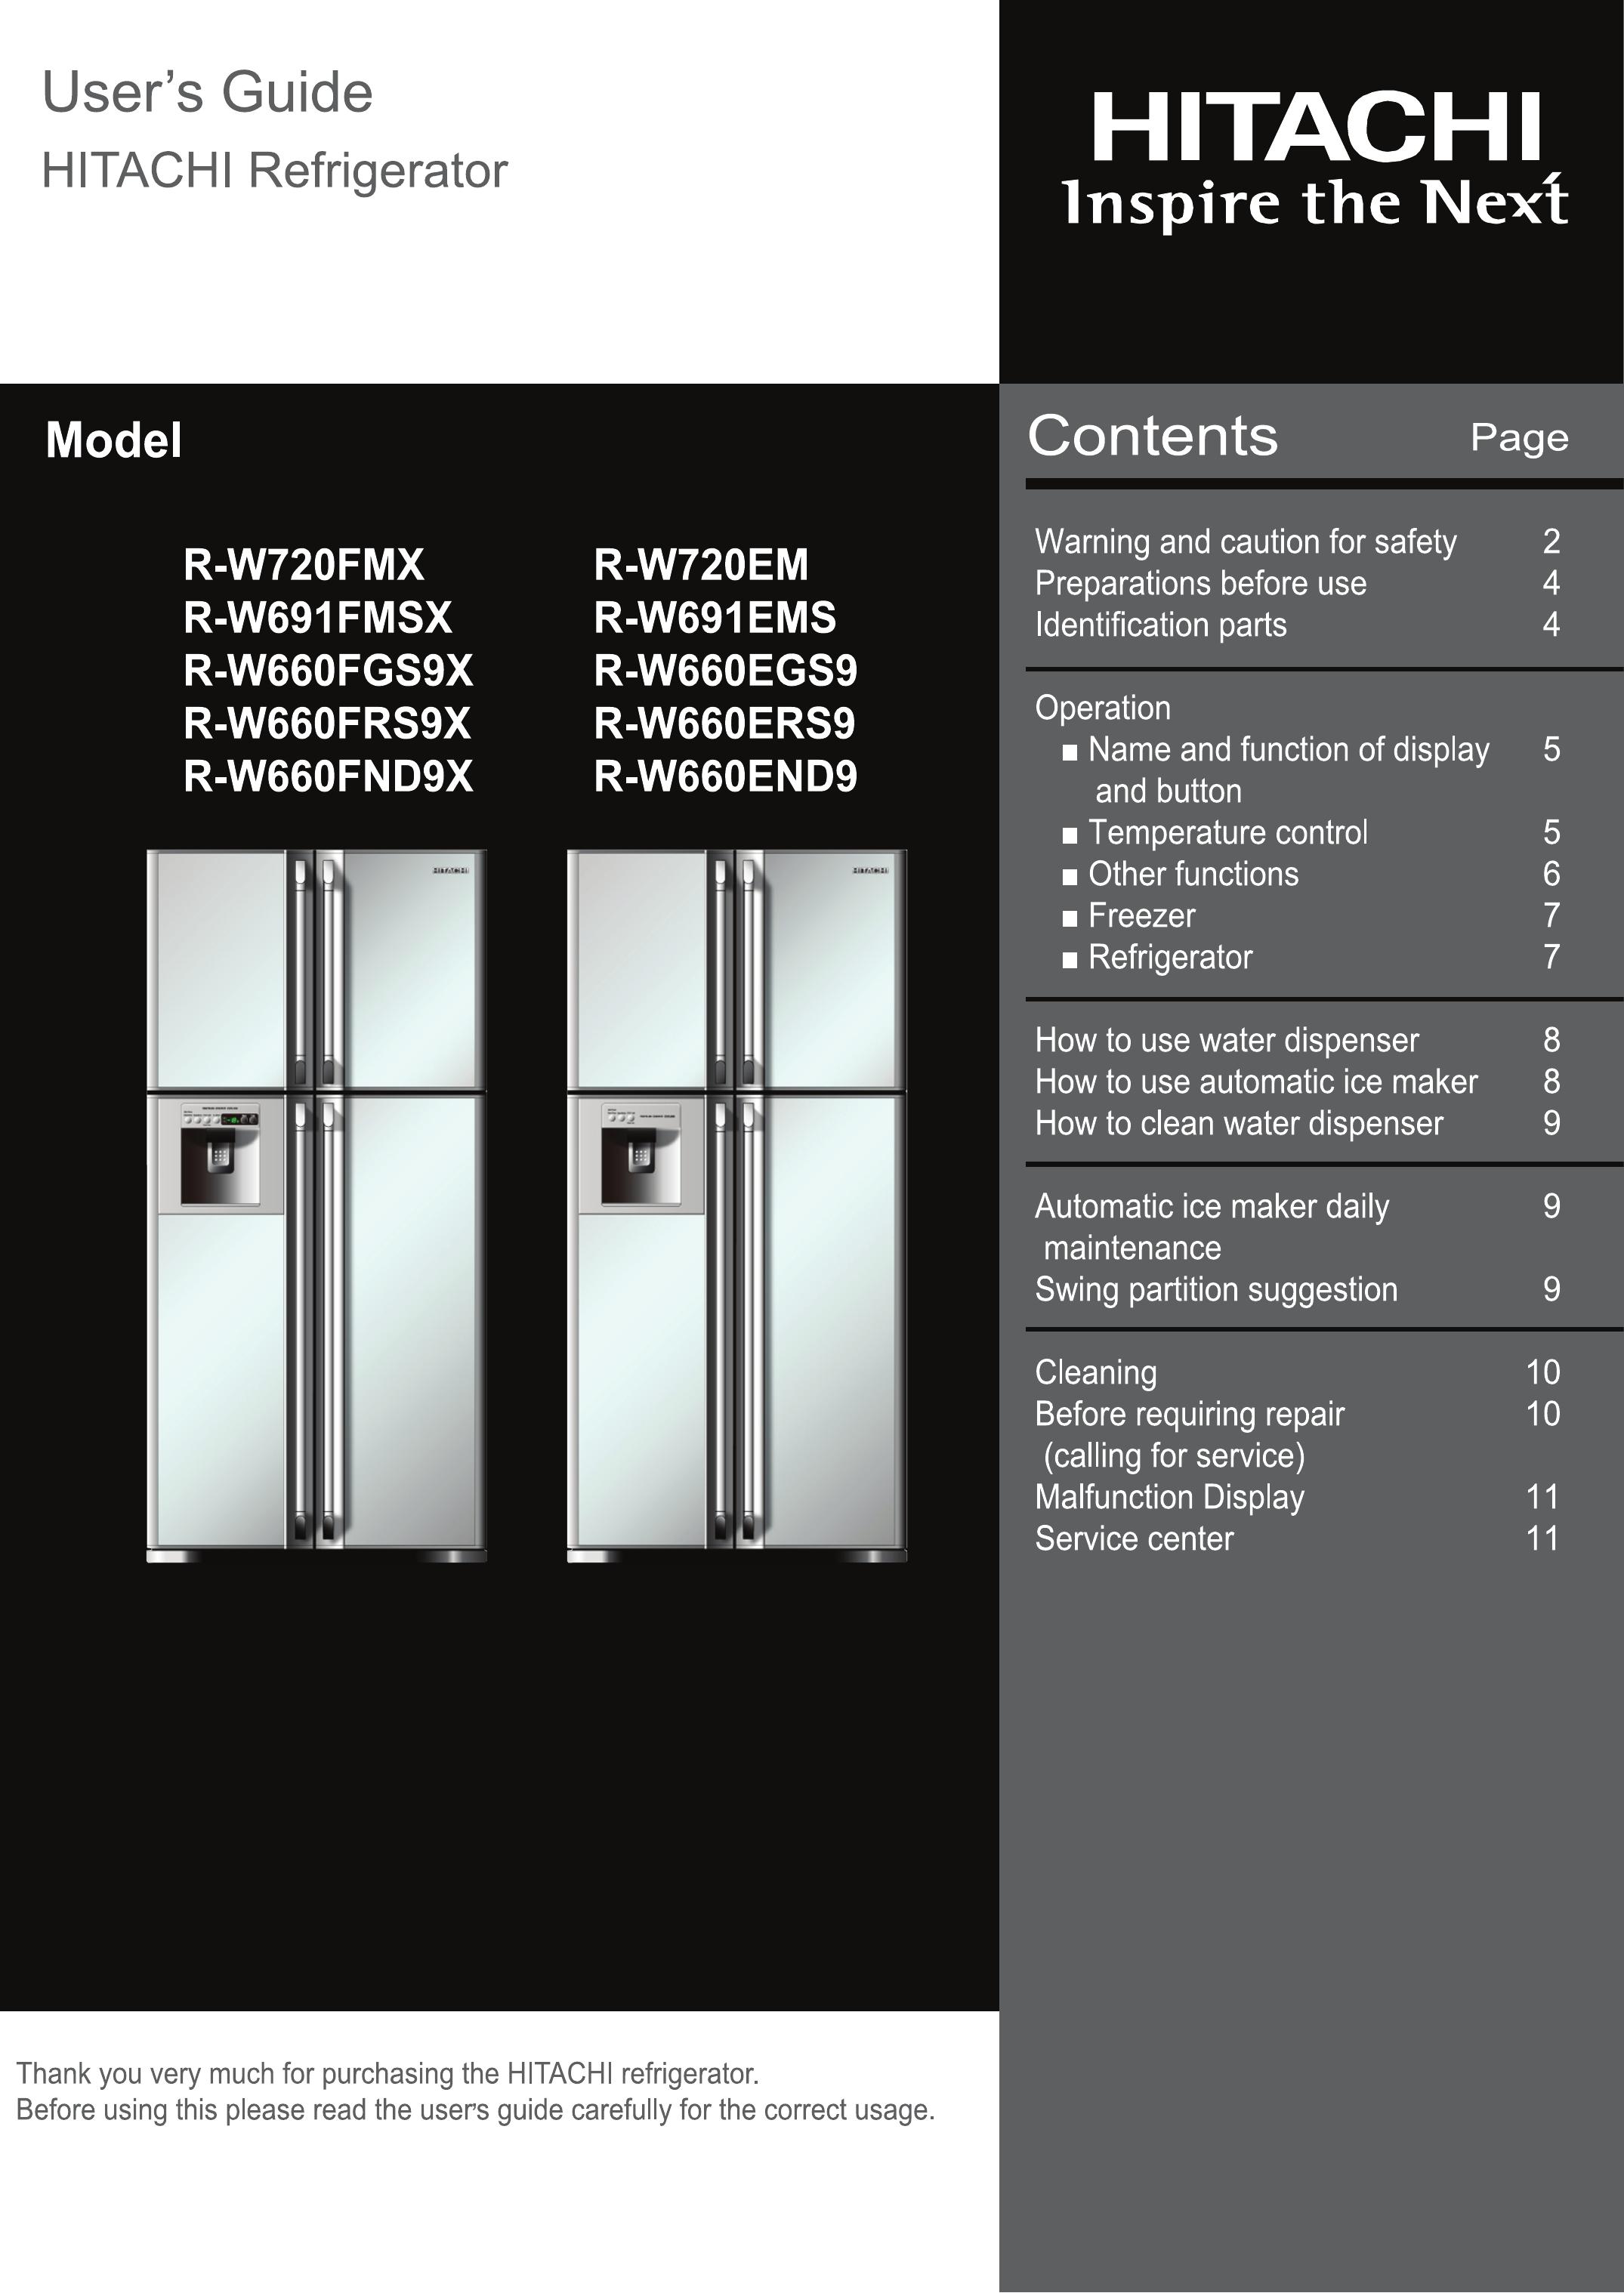 Hitachi R-W660FRS9X Refrigerator User Manual